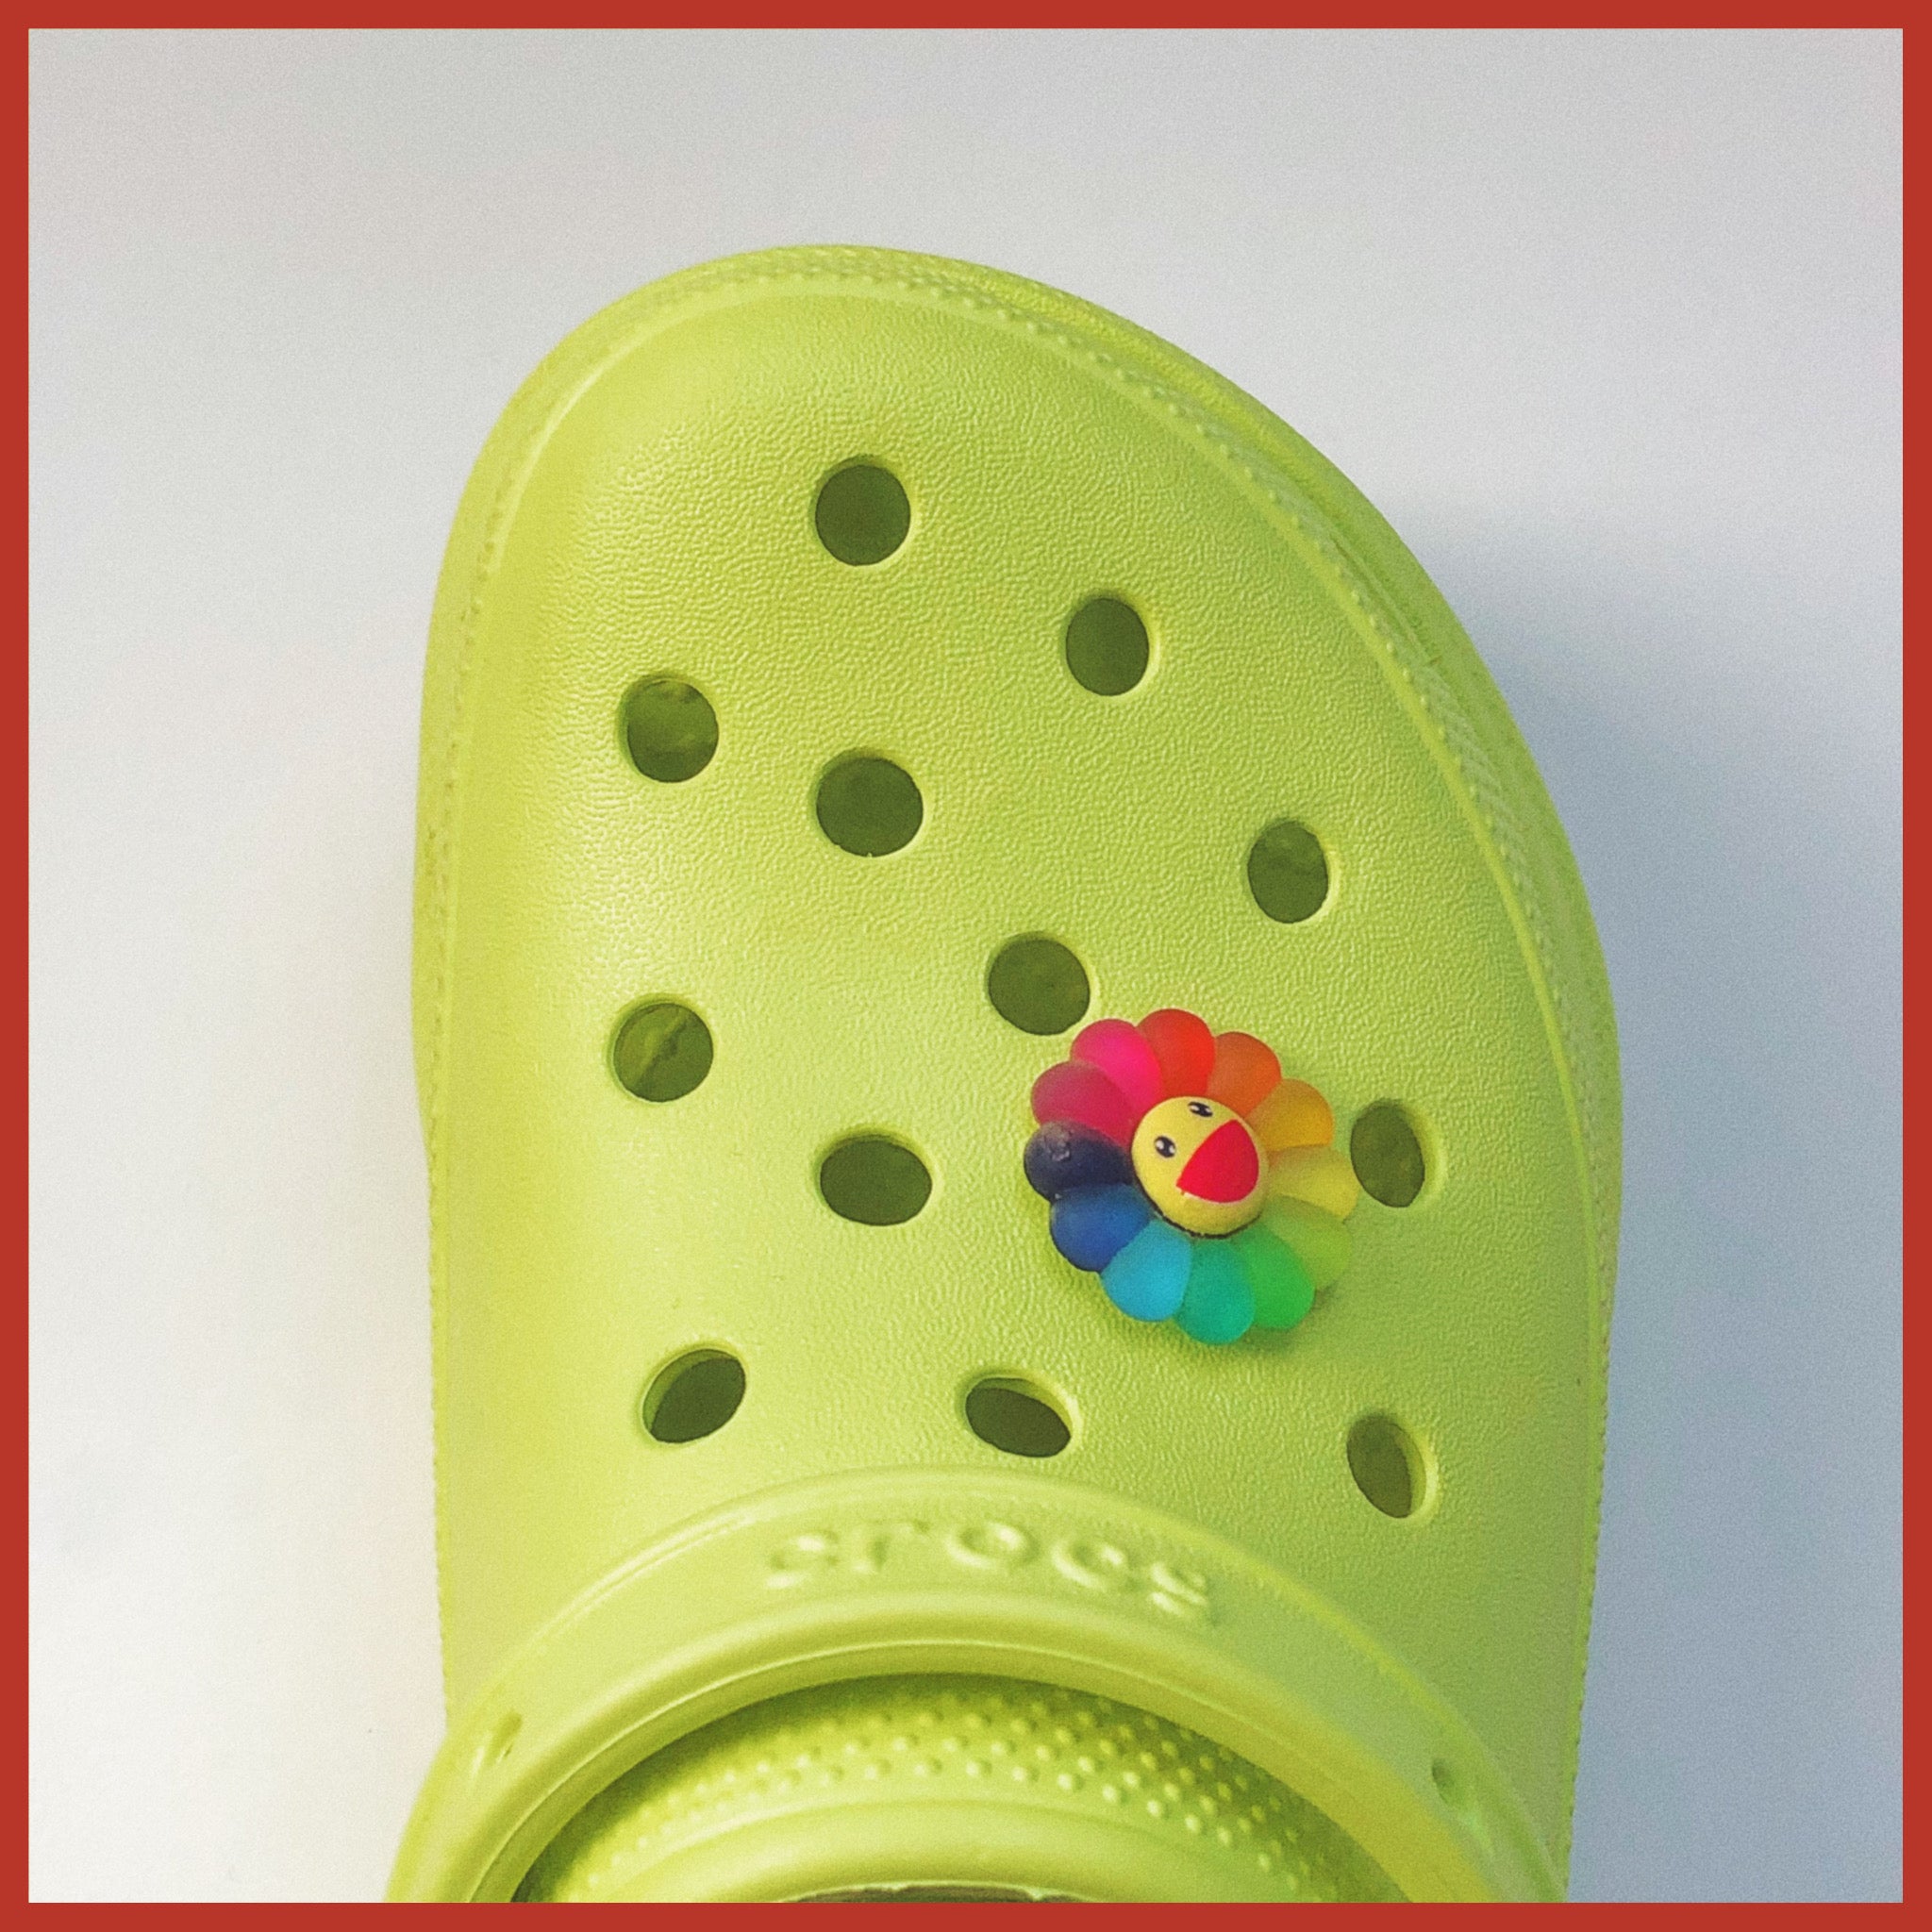 Brand Croc Charms – Kenzie Rae Shop